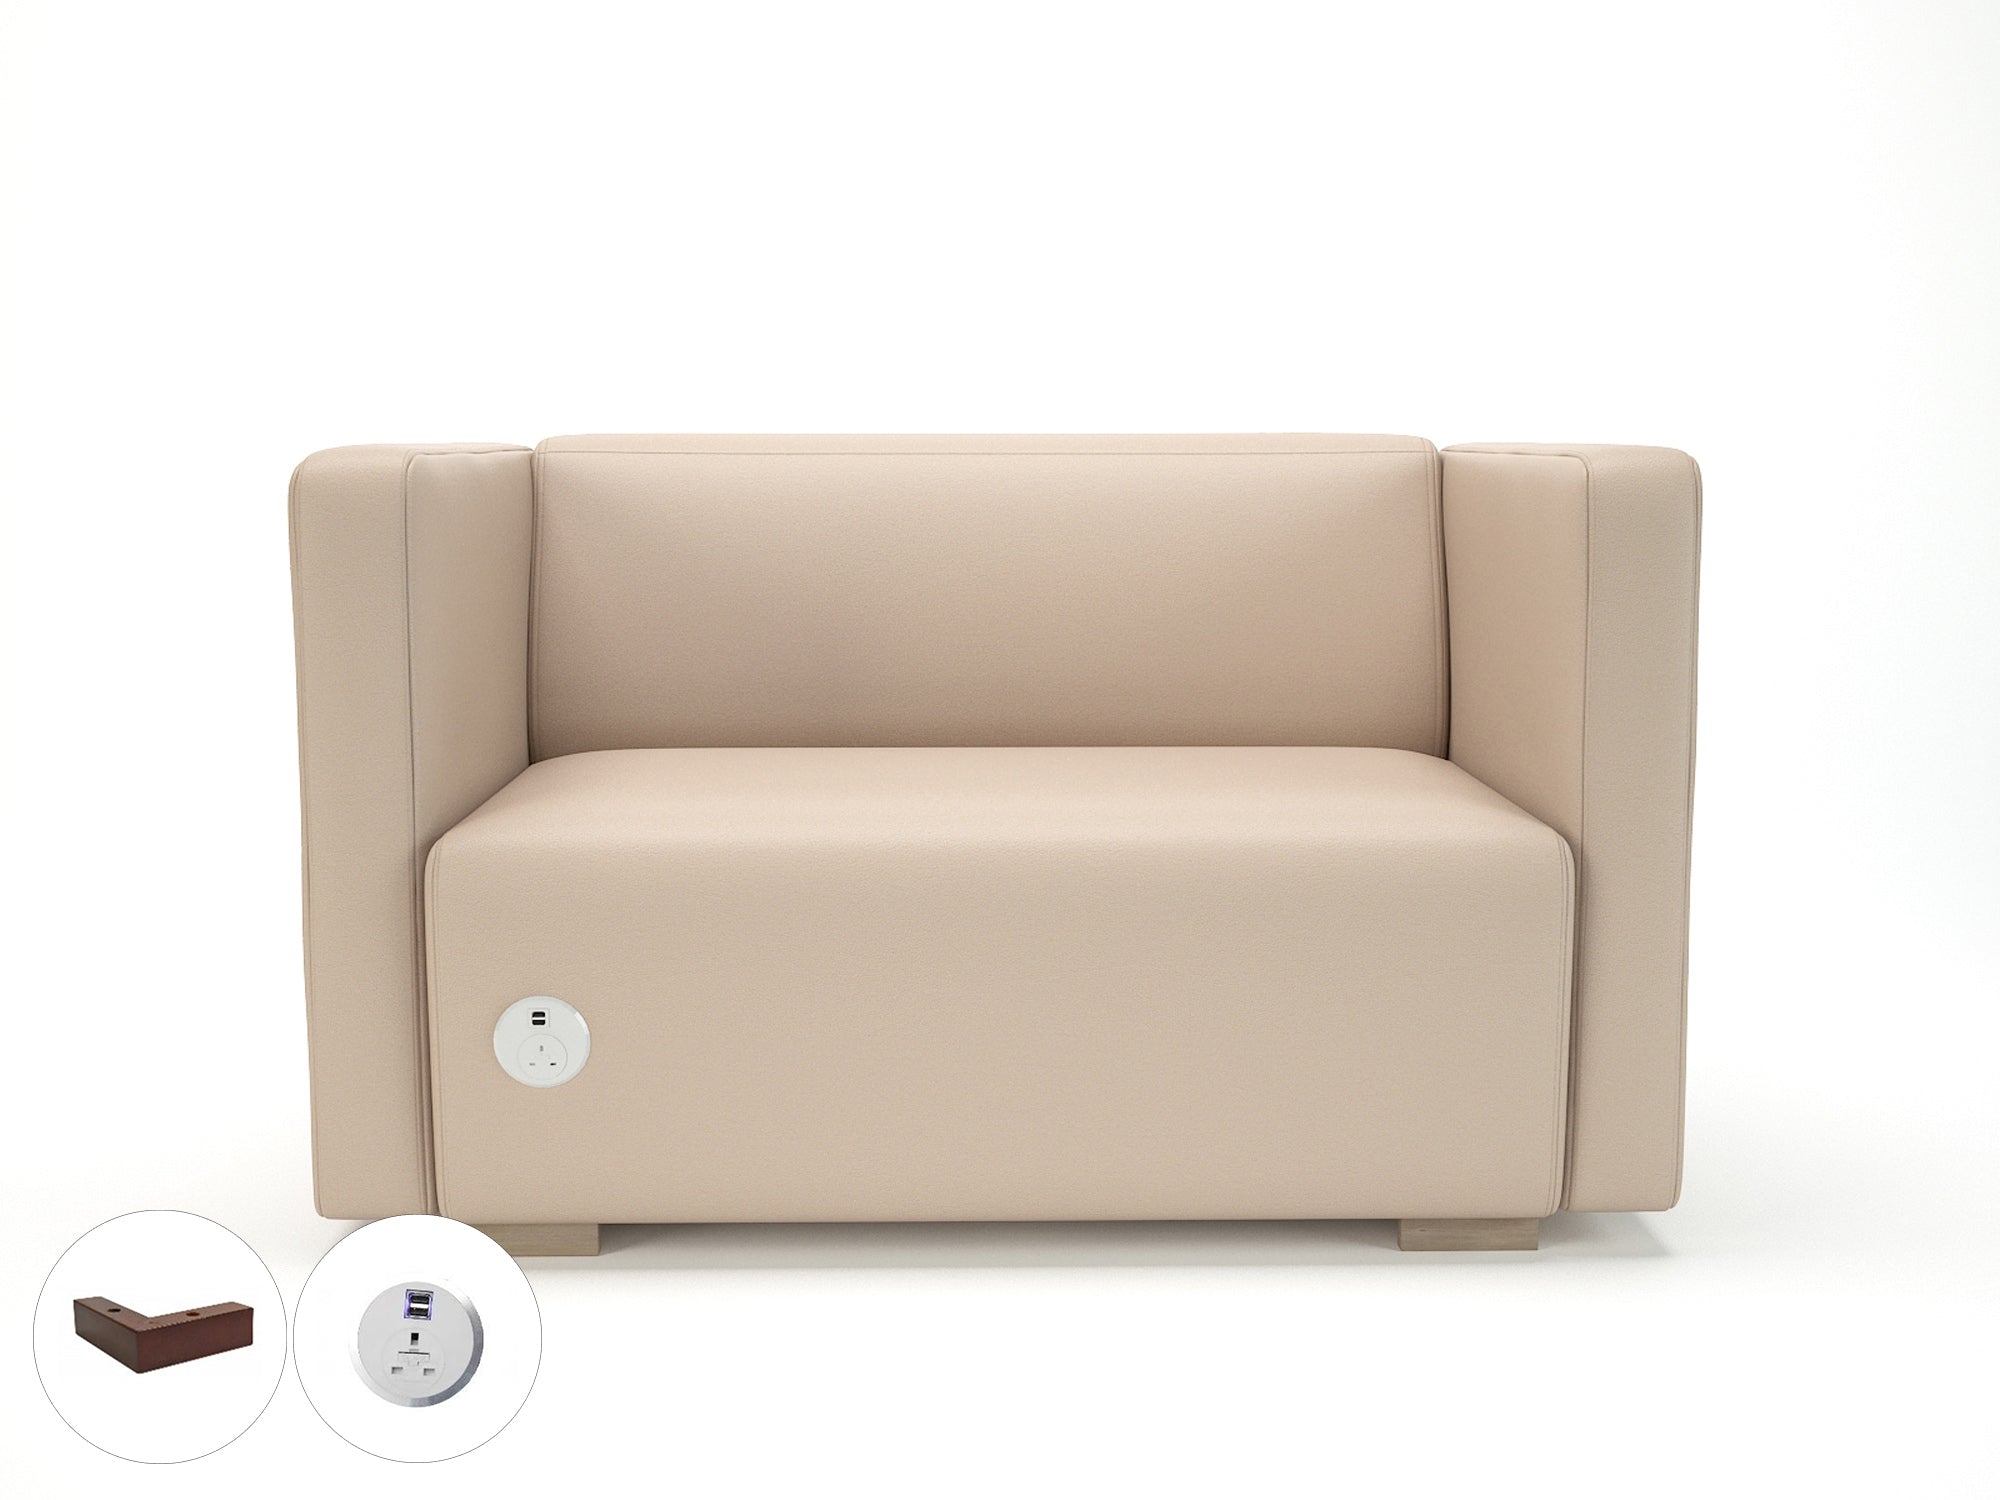 Carmel 130cm Wide Sofa in Cristina Marrone Ultima Faux Leather with Socket